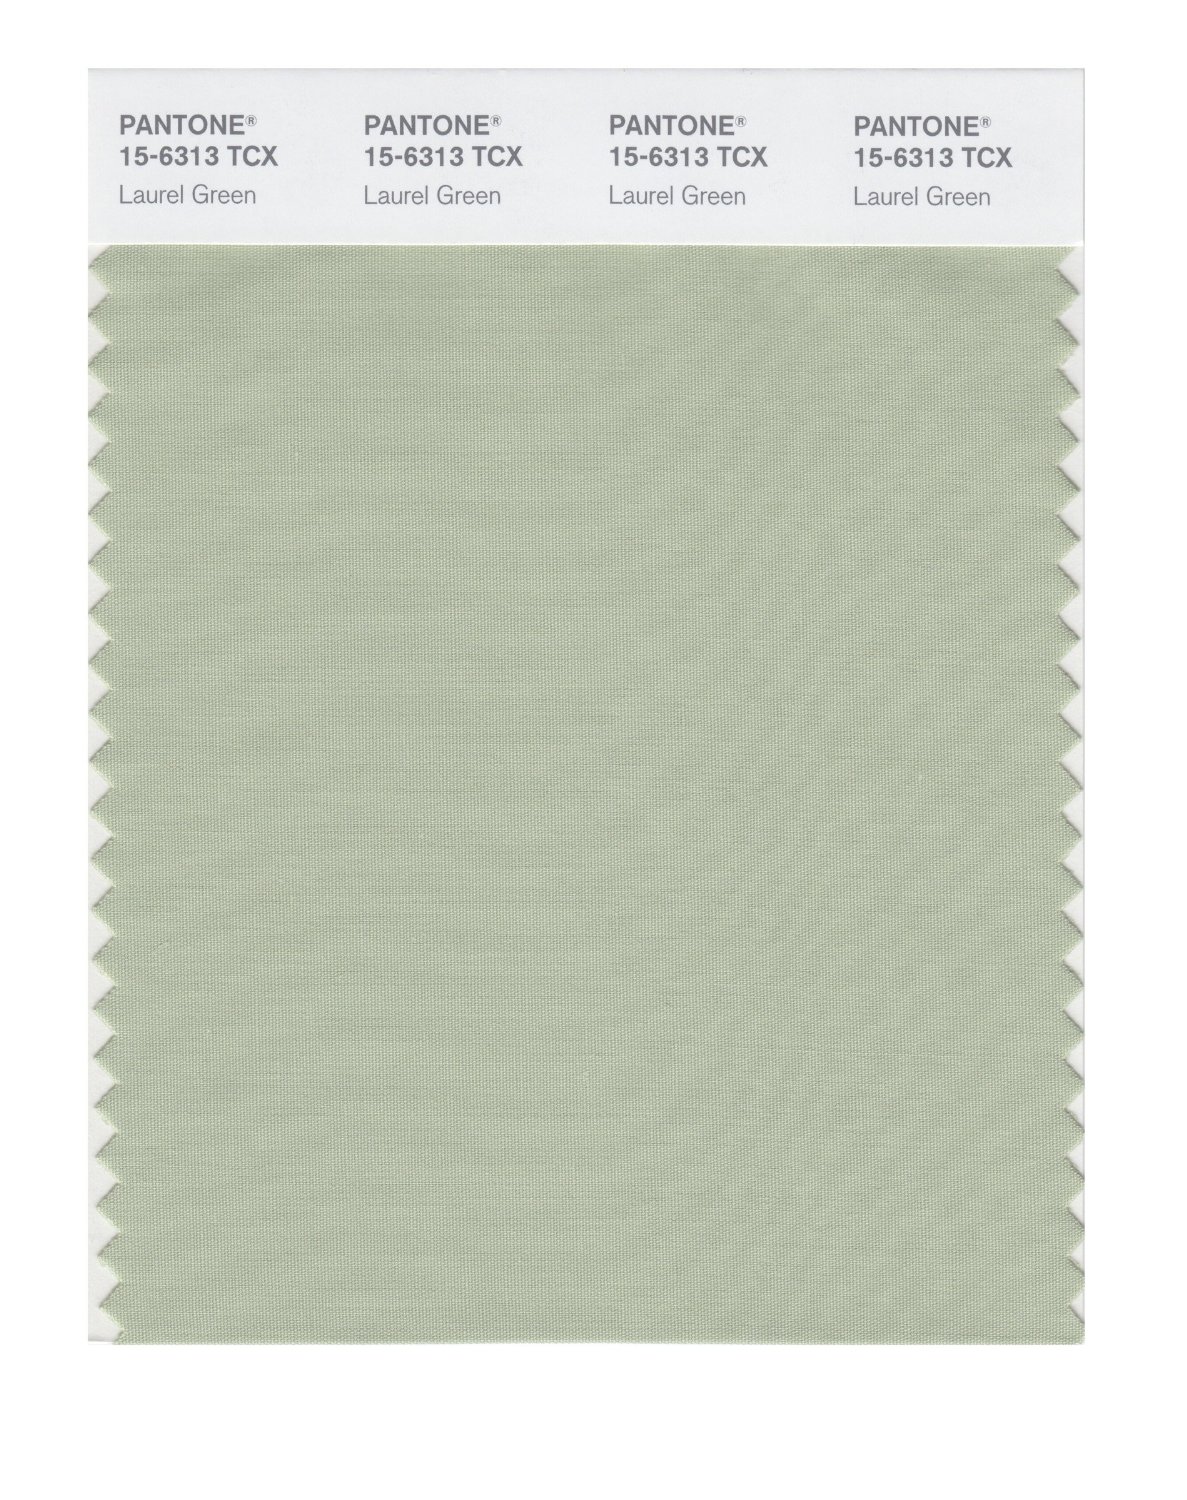 Pantone Cotton Swatch 15-6313 Laurel Green